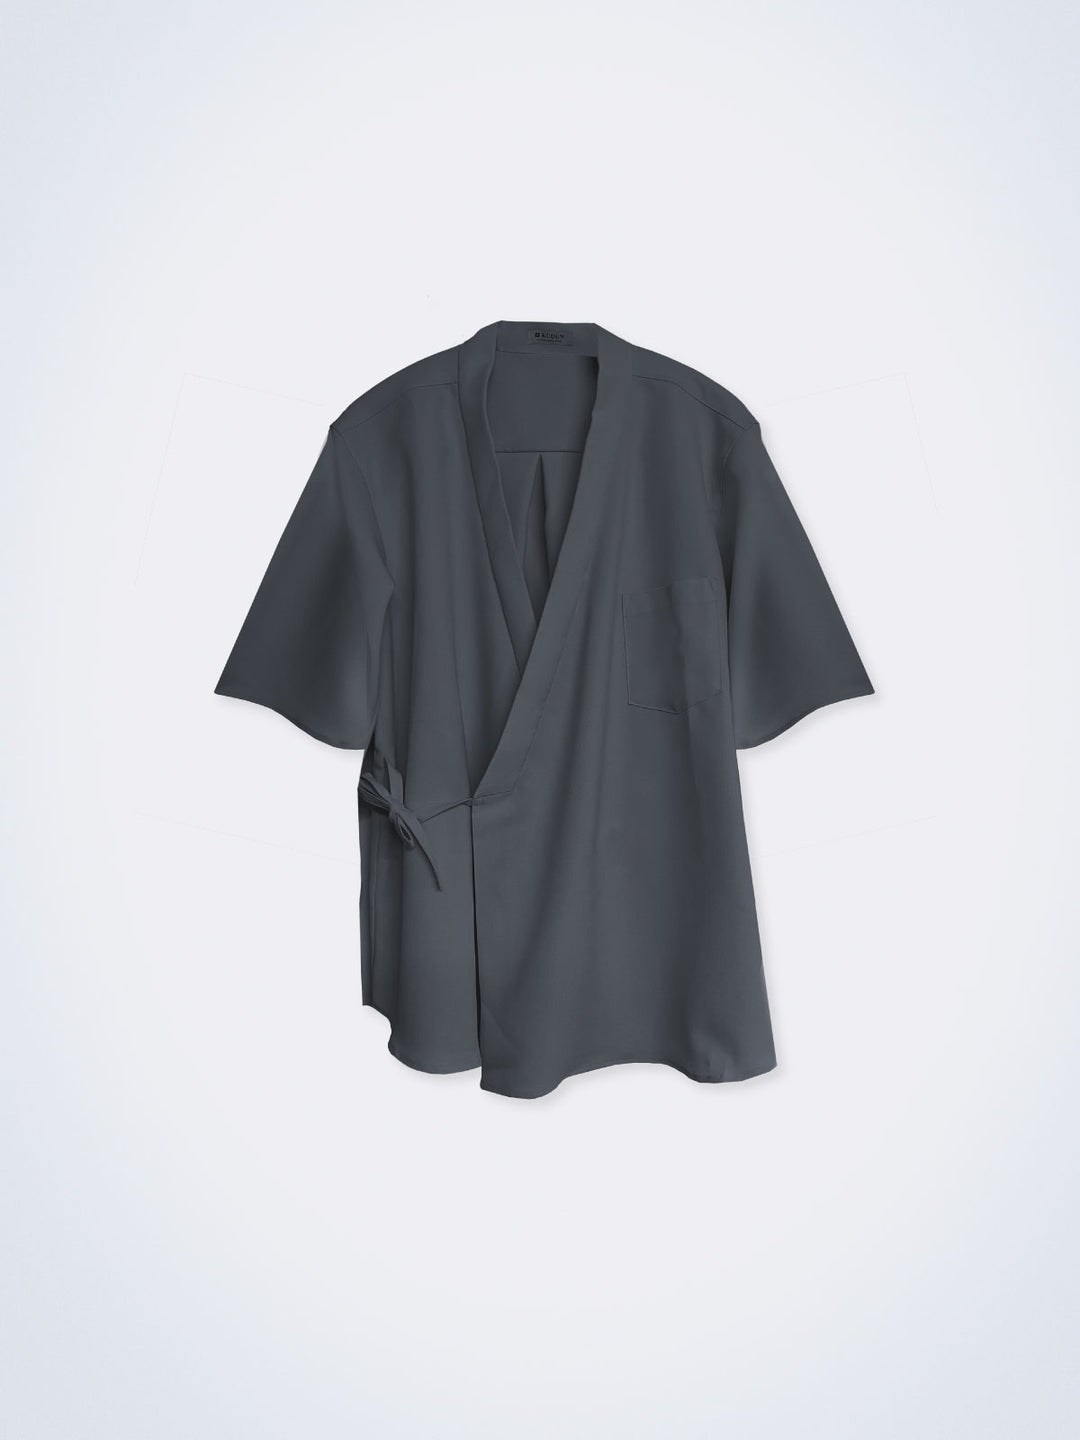 [Debut Pre tailor-made]Samurai Mode Shirt II - Chill -